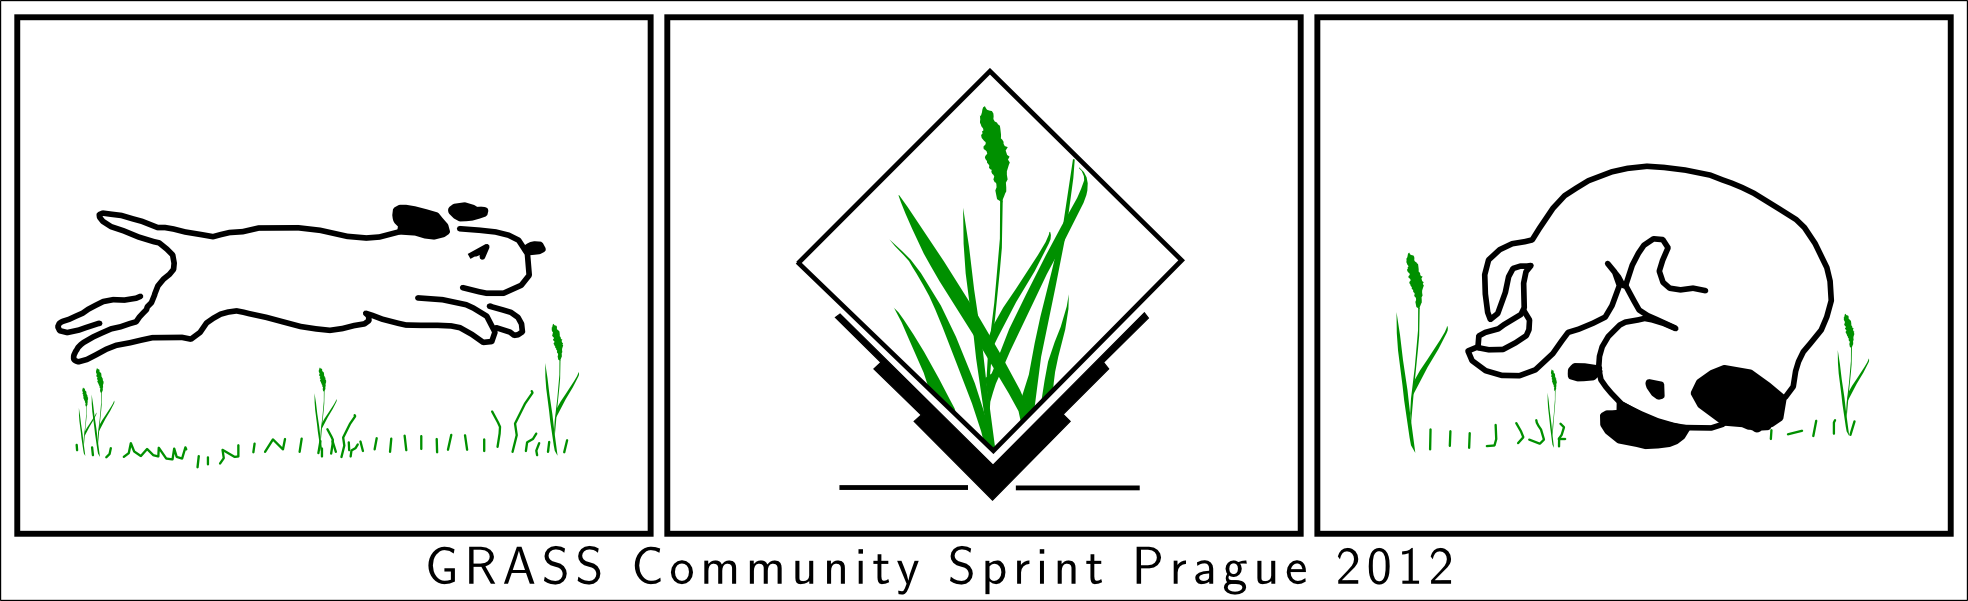 File:Community sprint prague2012.png